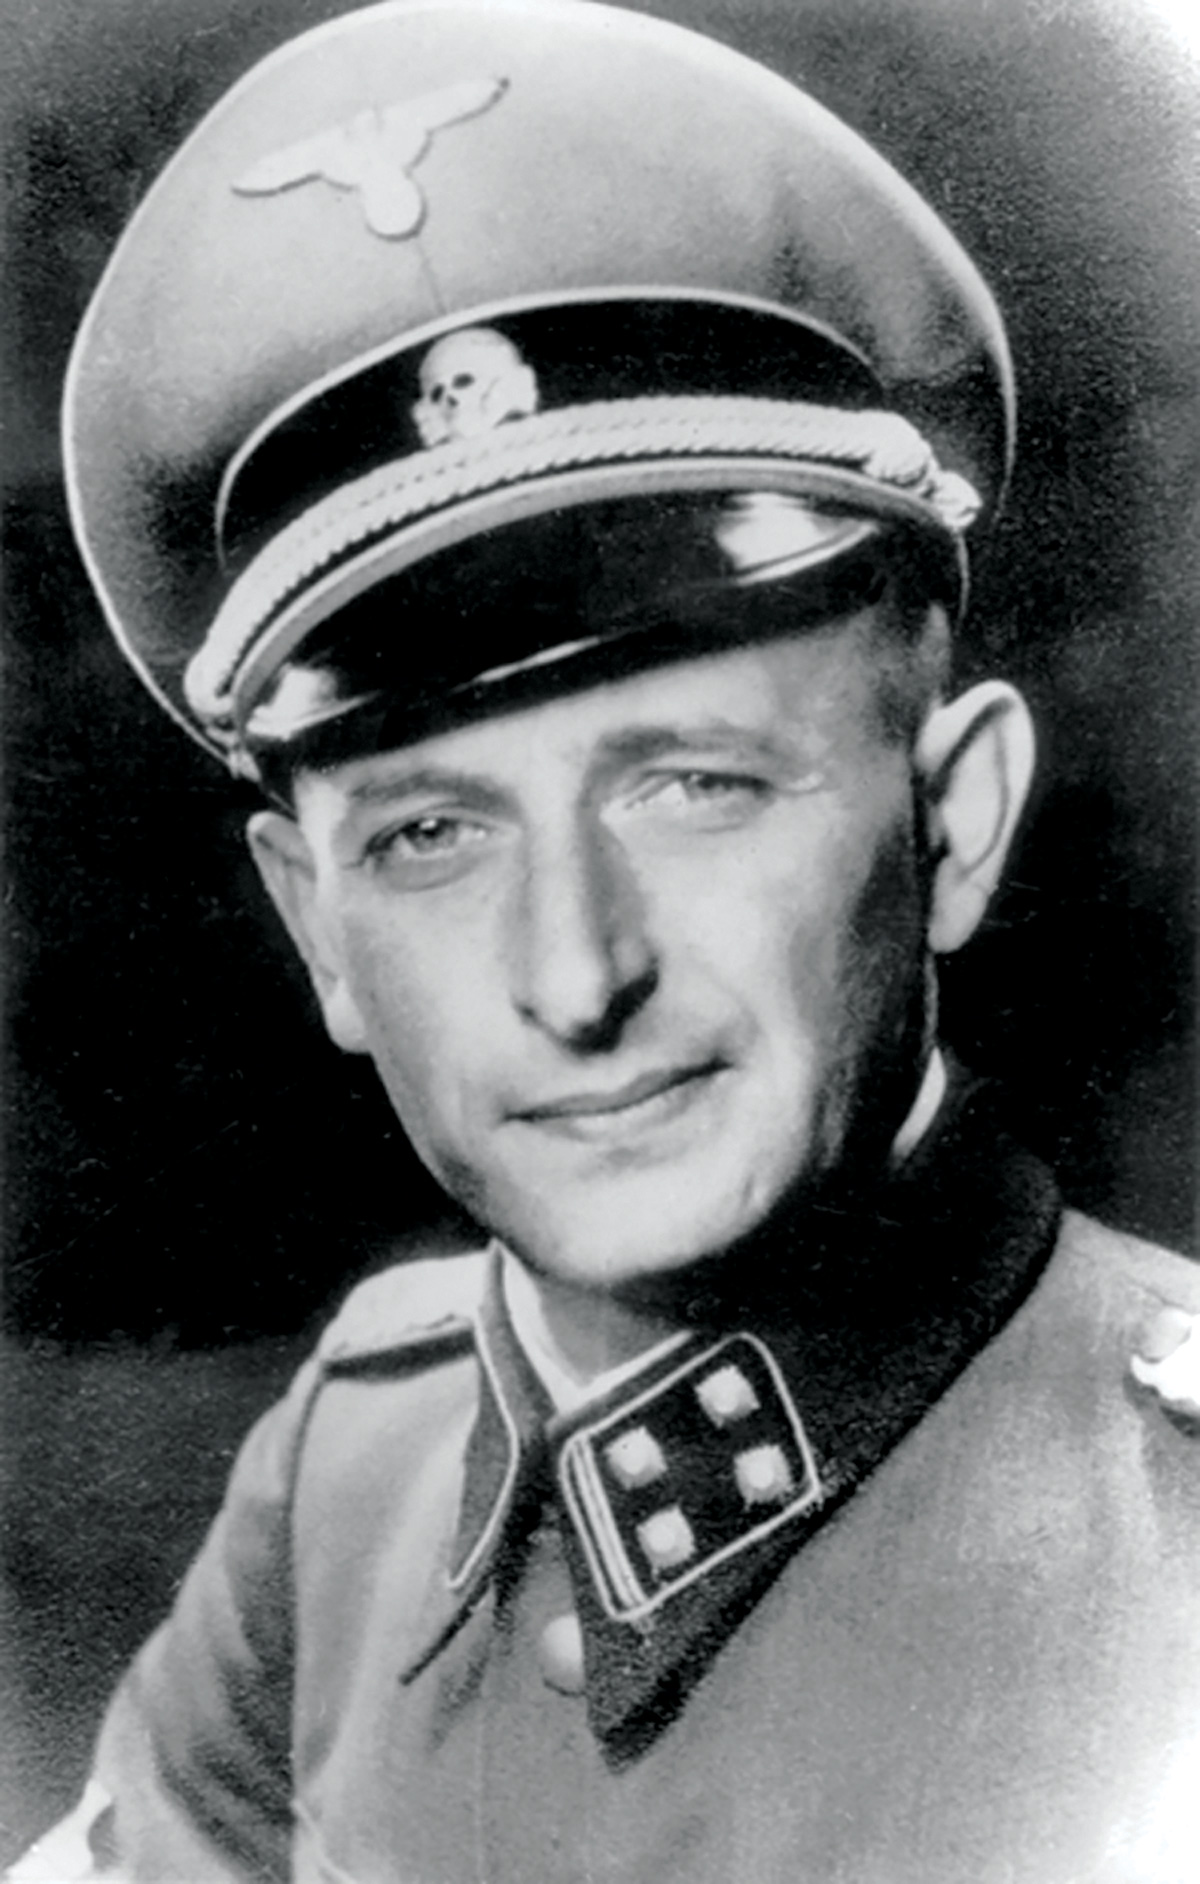 Photo of SS-Obersturmbannführer Adolf Eichmann